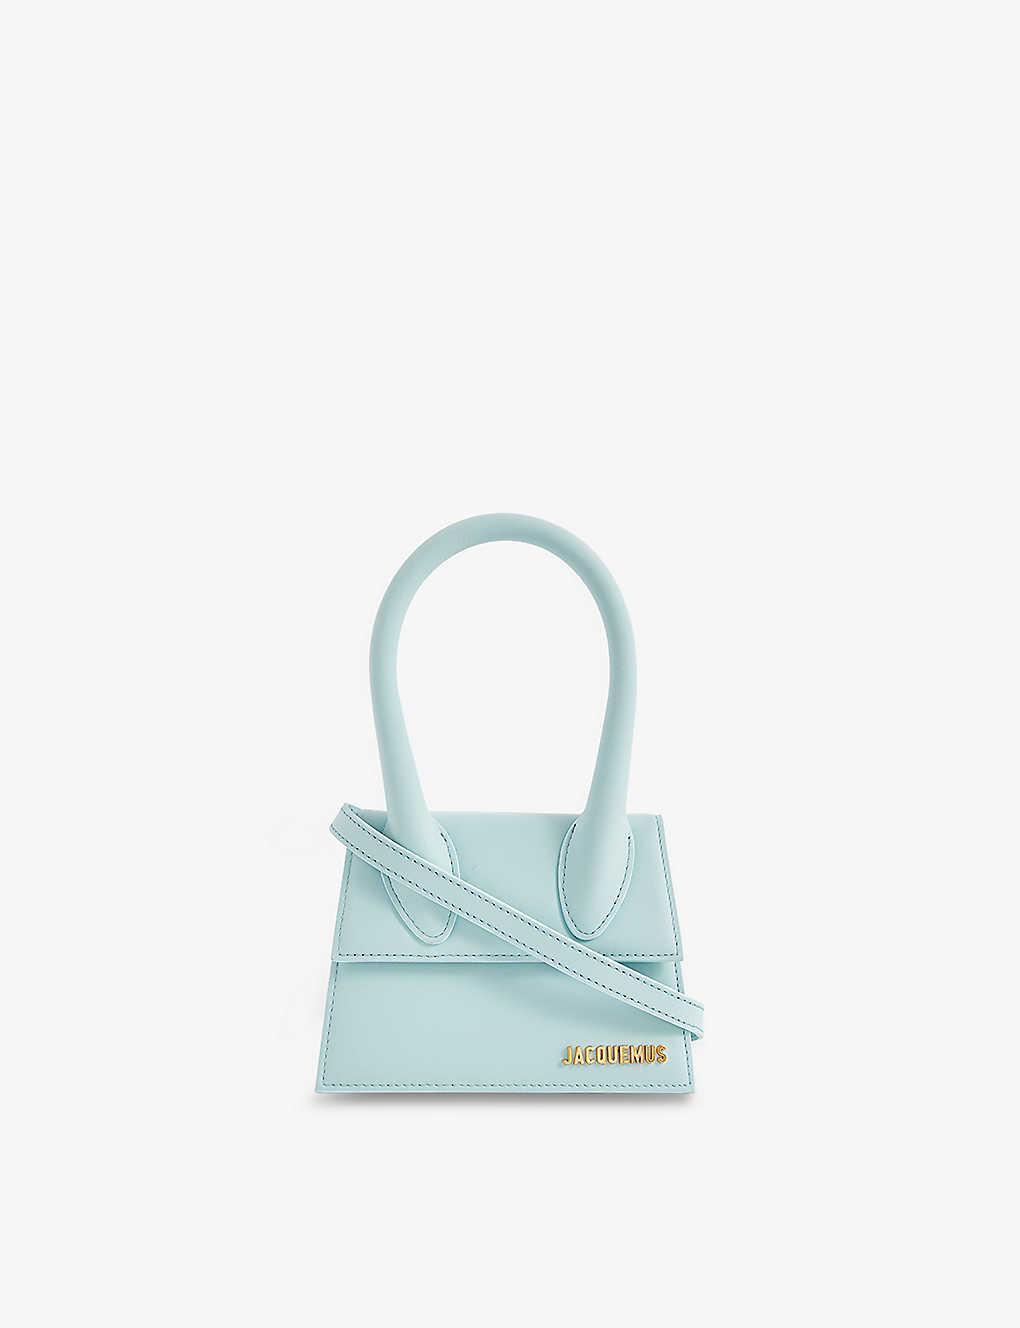 Jacquemus Le Chiquito Medium Leather Top-handle Bag in Blue | Lyst